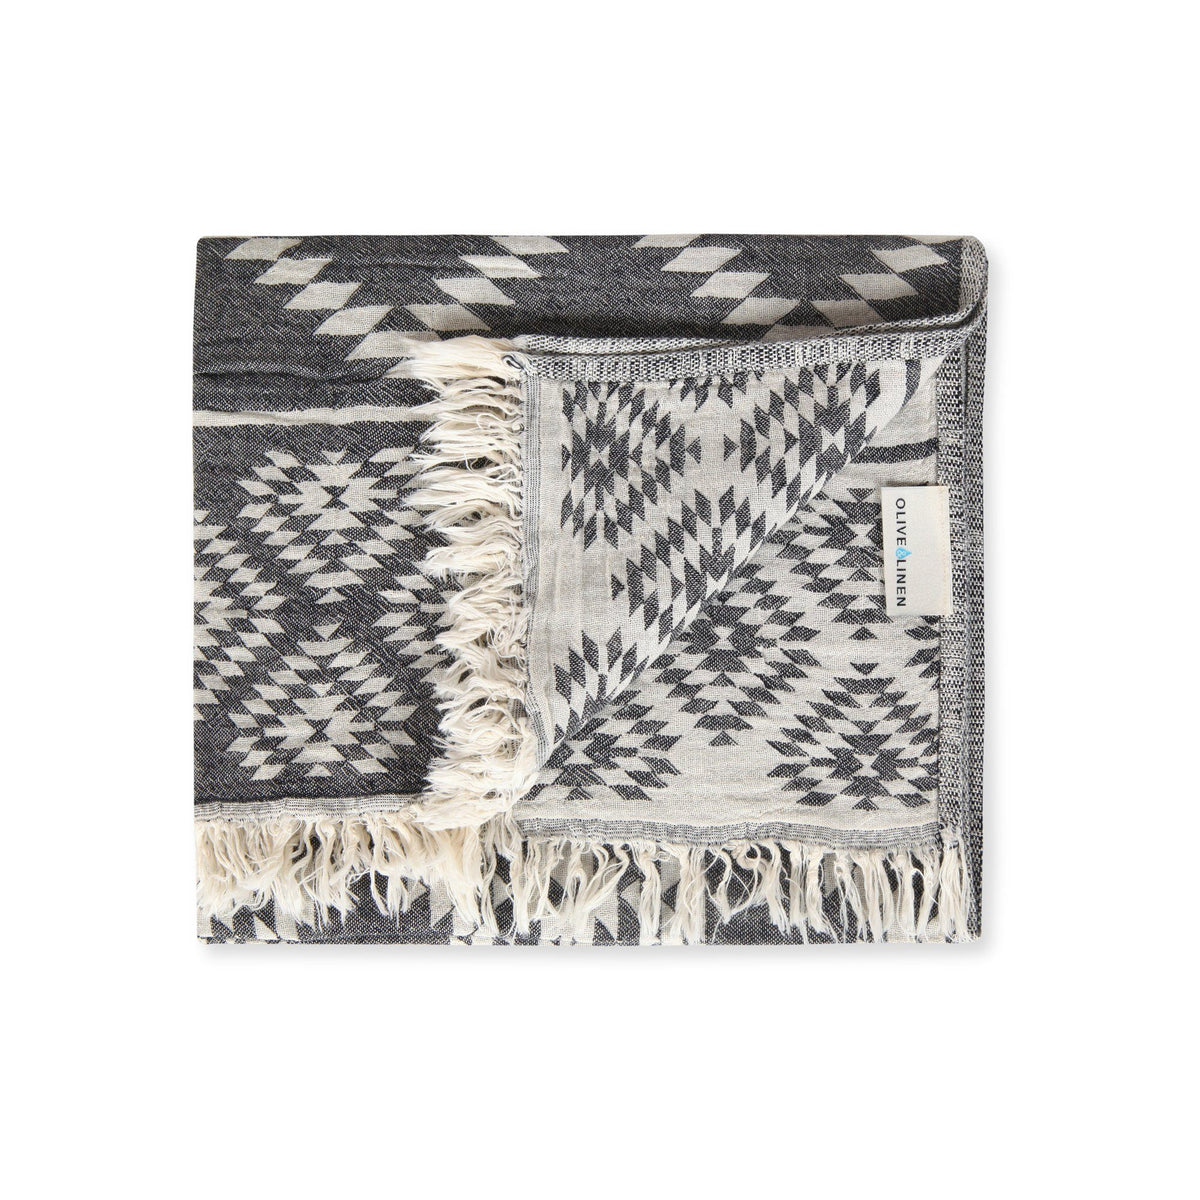 Aztec Turkish Håndklæde / Kast